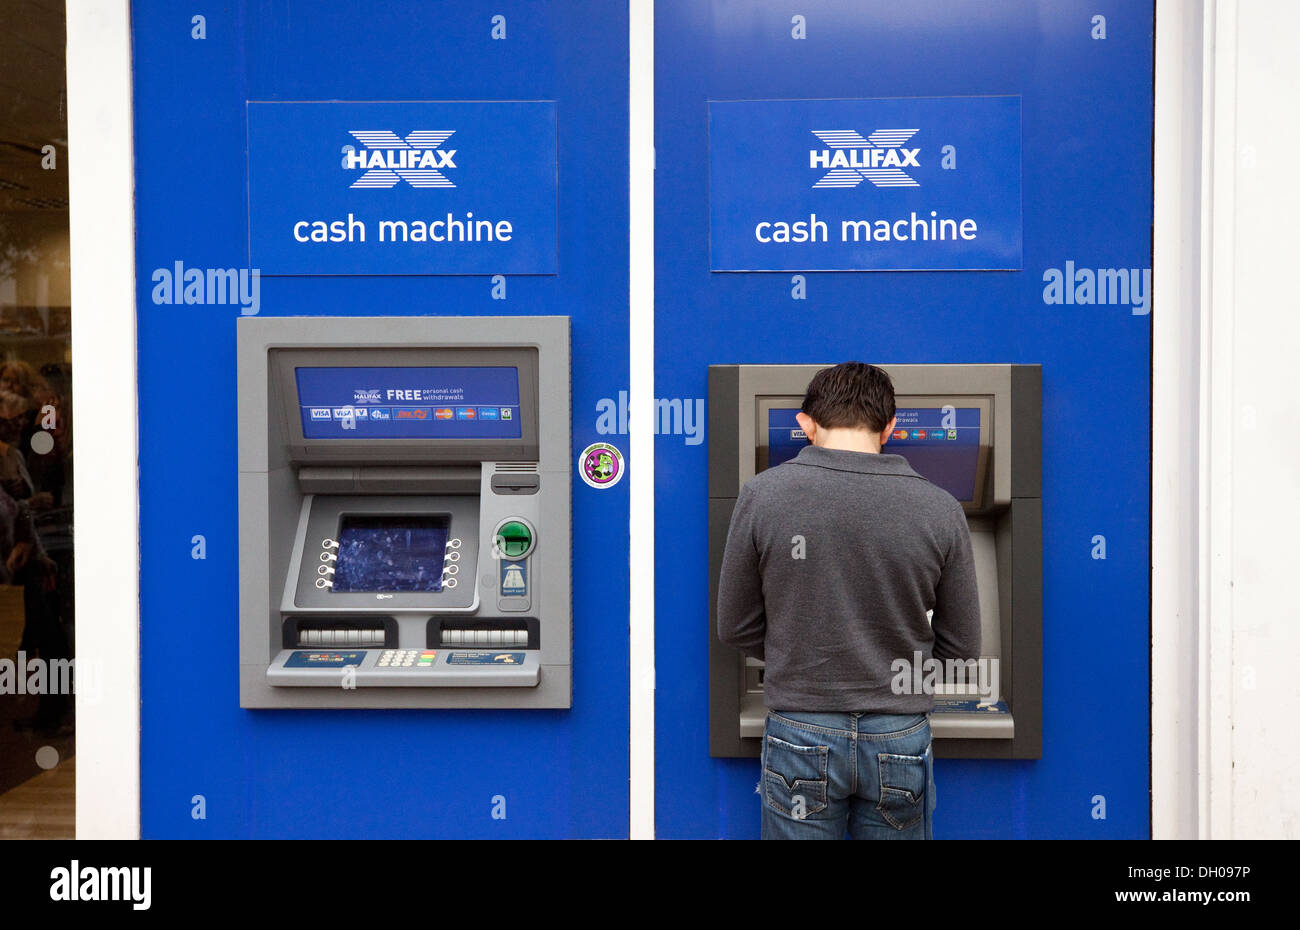 Halifax bank cash machines - man getting money, Norwich, Norfolk UK Stock Photo